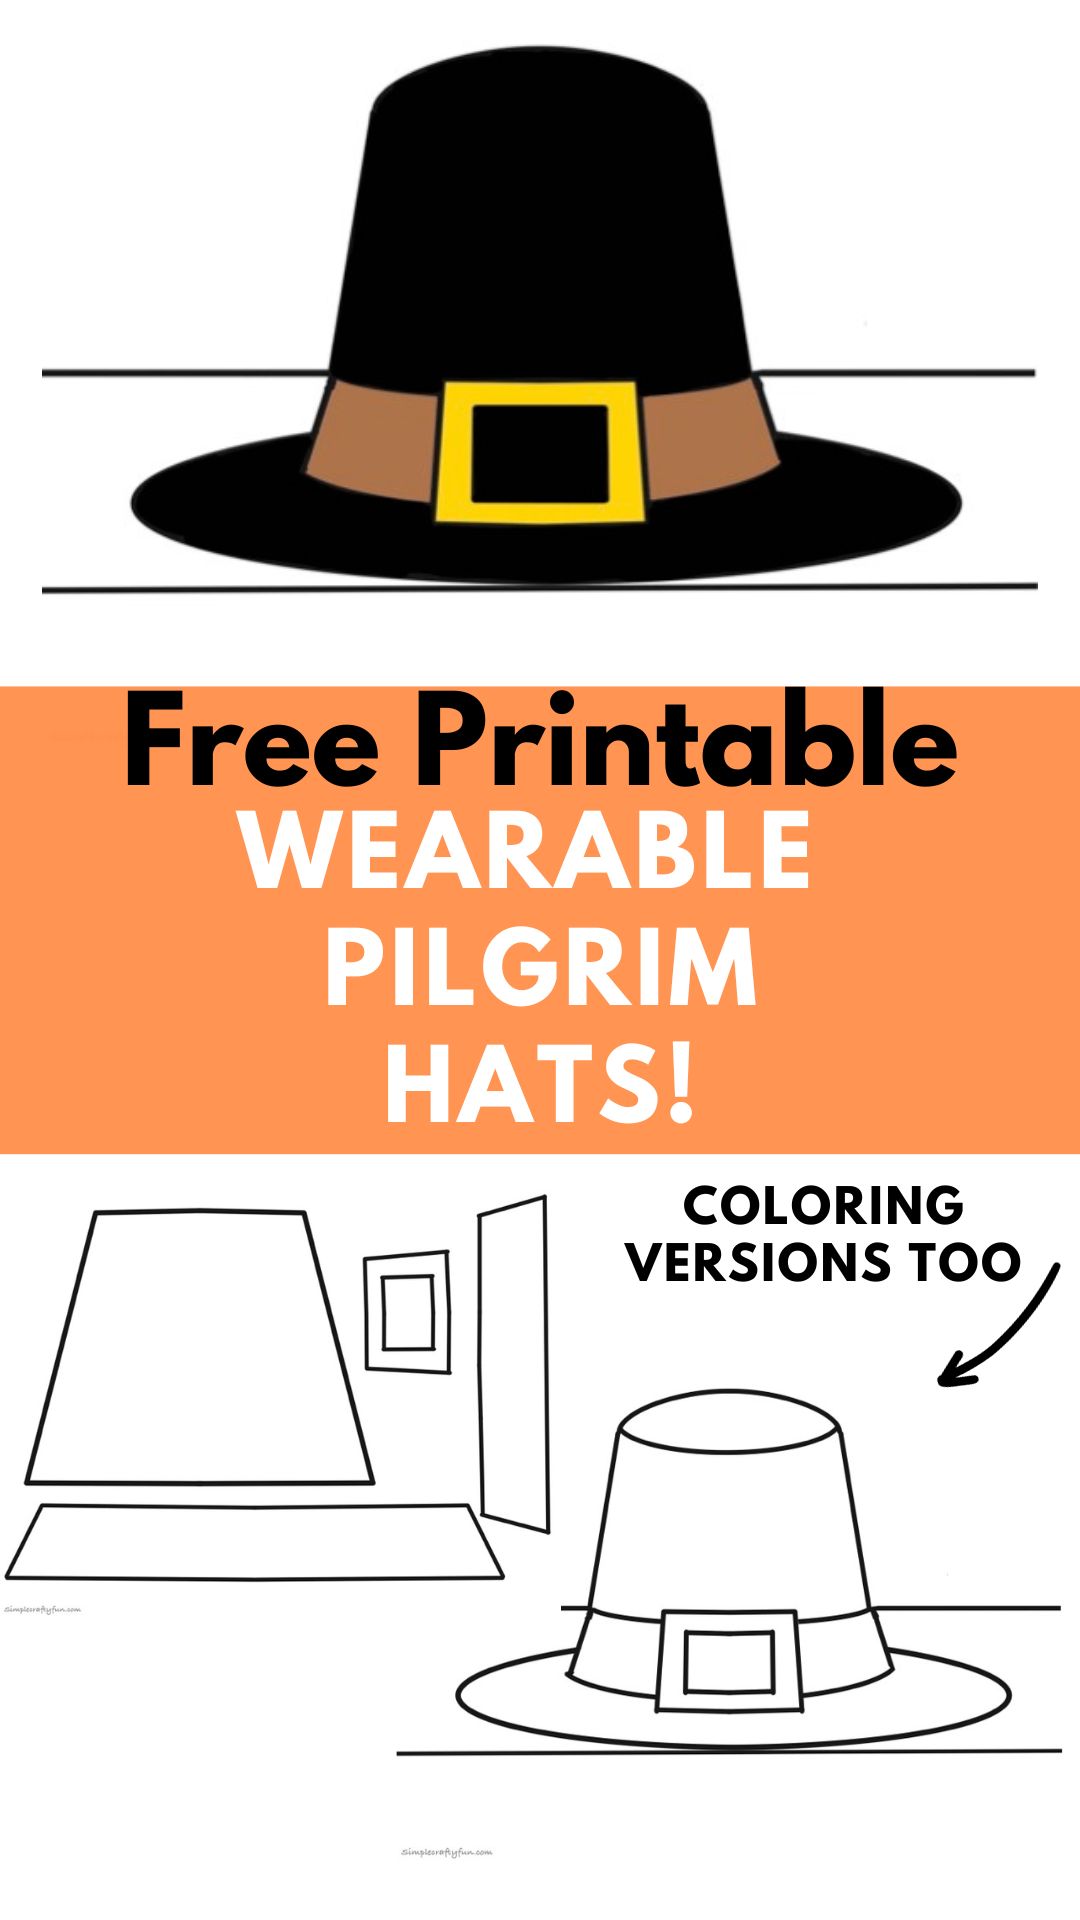 Free printable pilgrim hat for kids